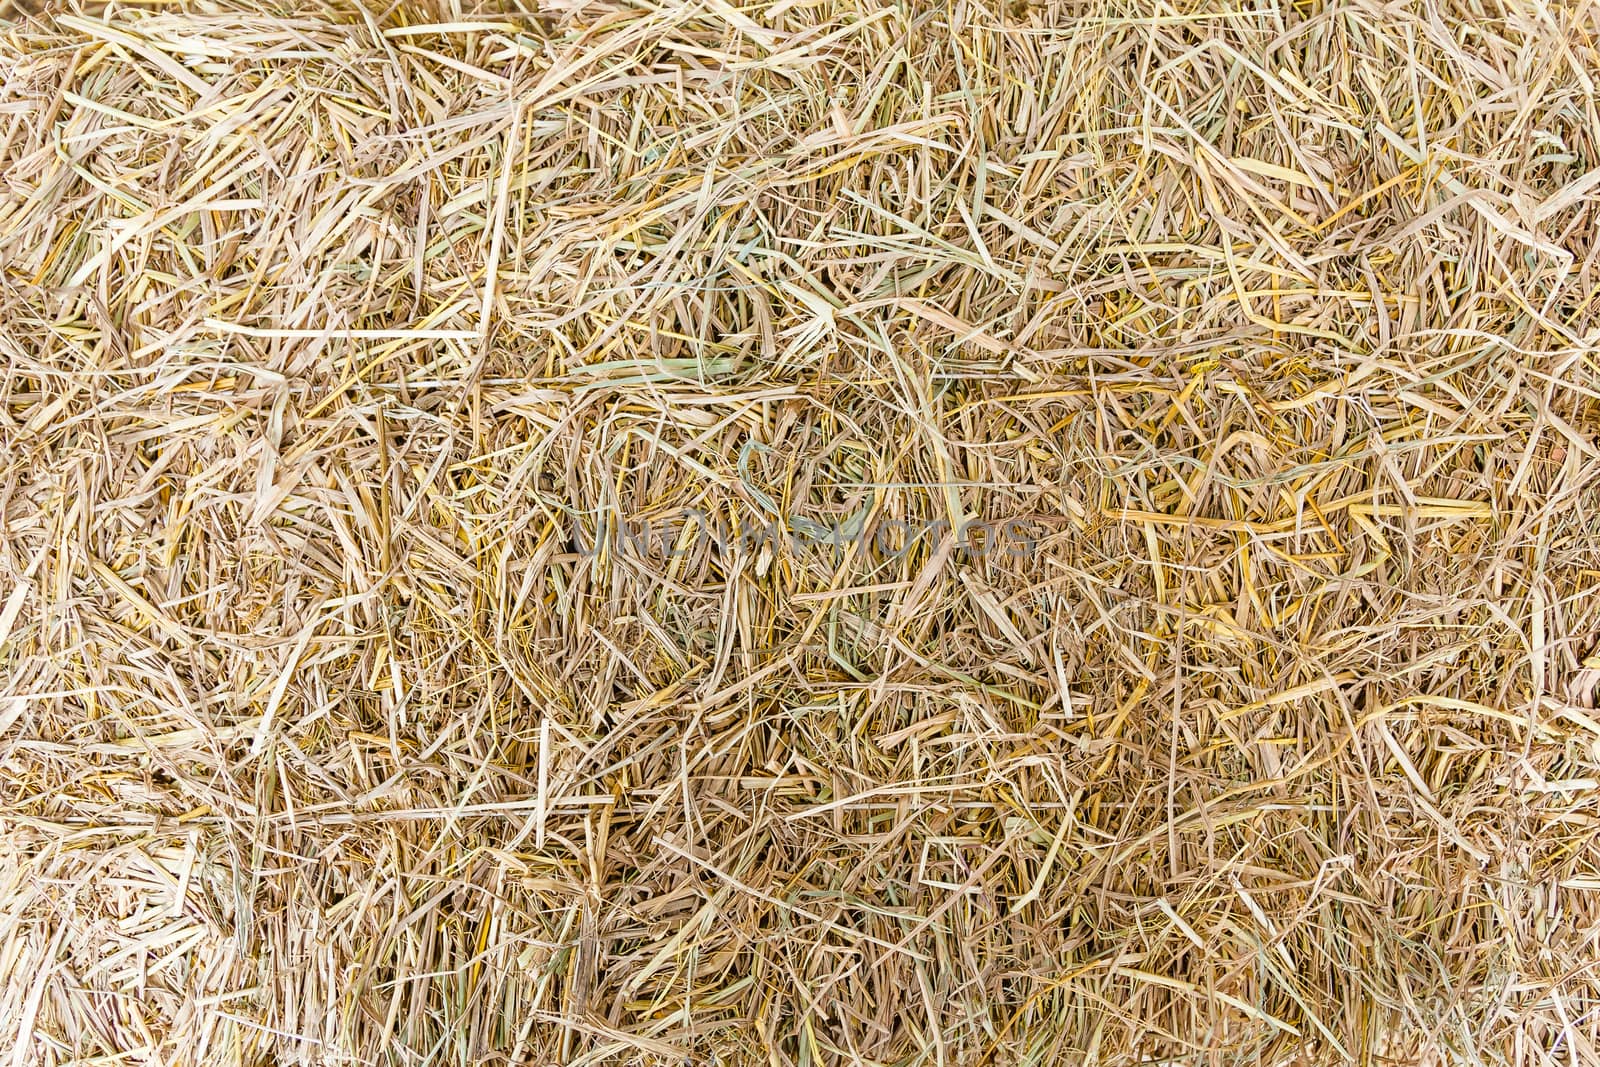 Hay on ground. by stigmatize